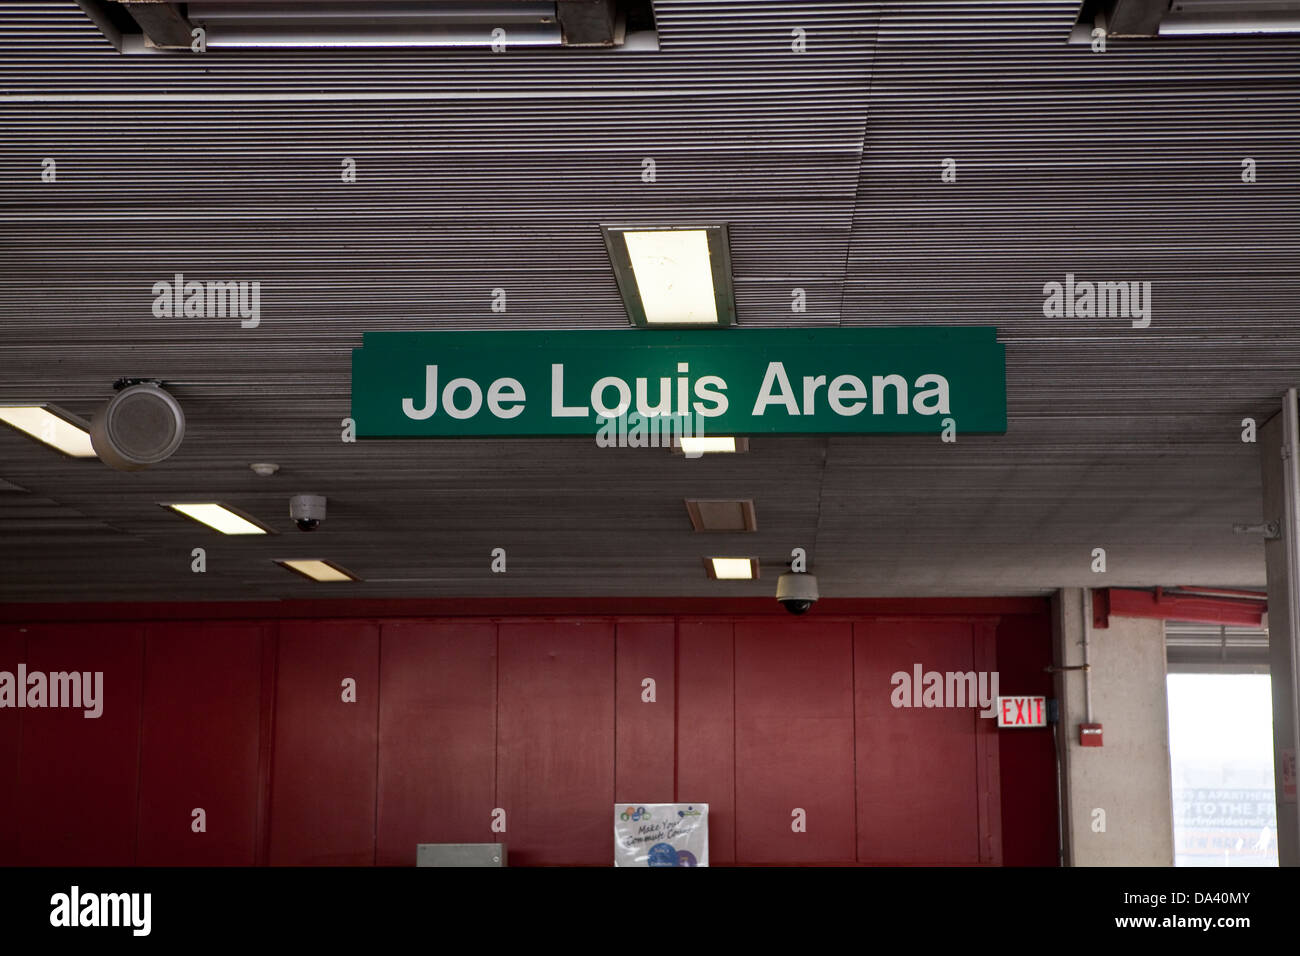 Joe louis arena hi-res stock photography and images - Alamy